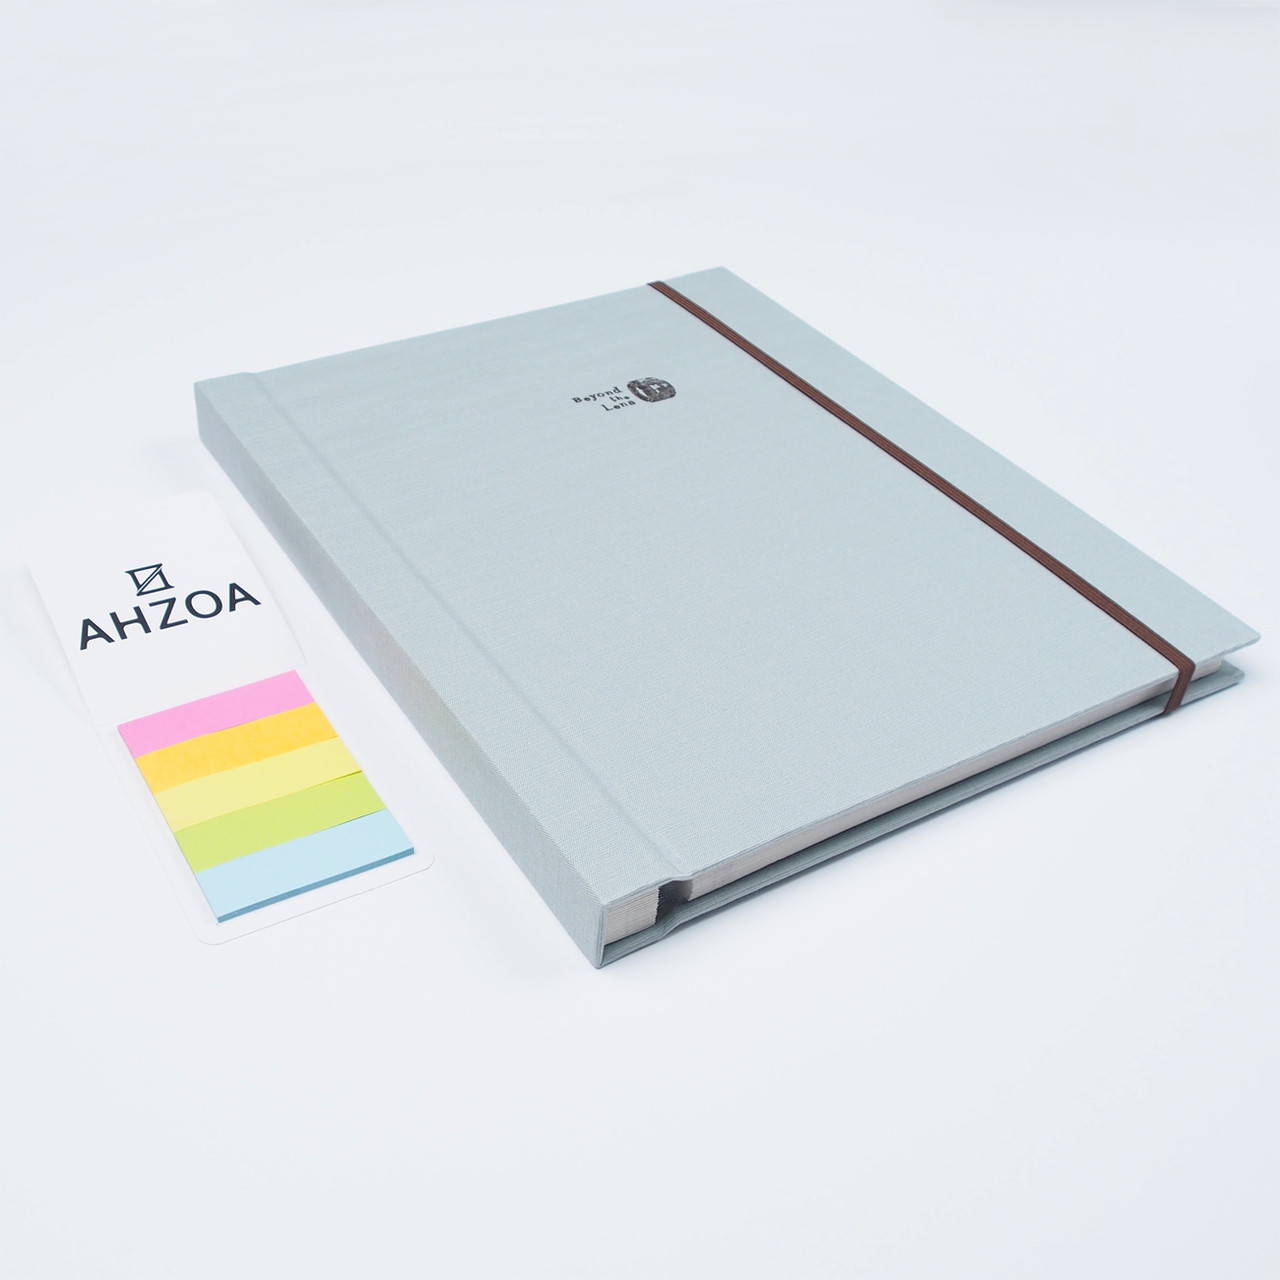 Self-adhesive Photo Album White Paper Version (sky) - AHZOA